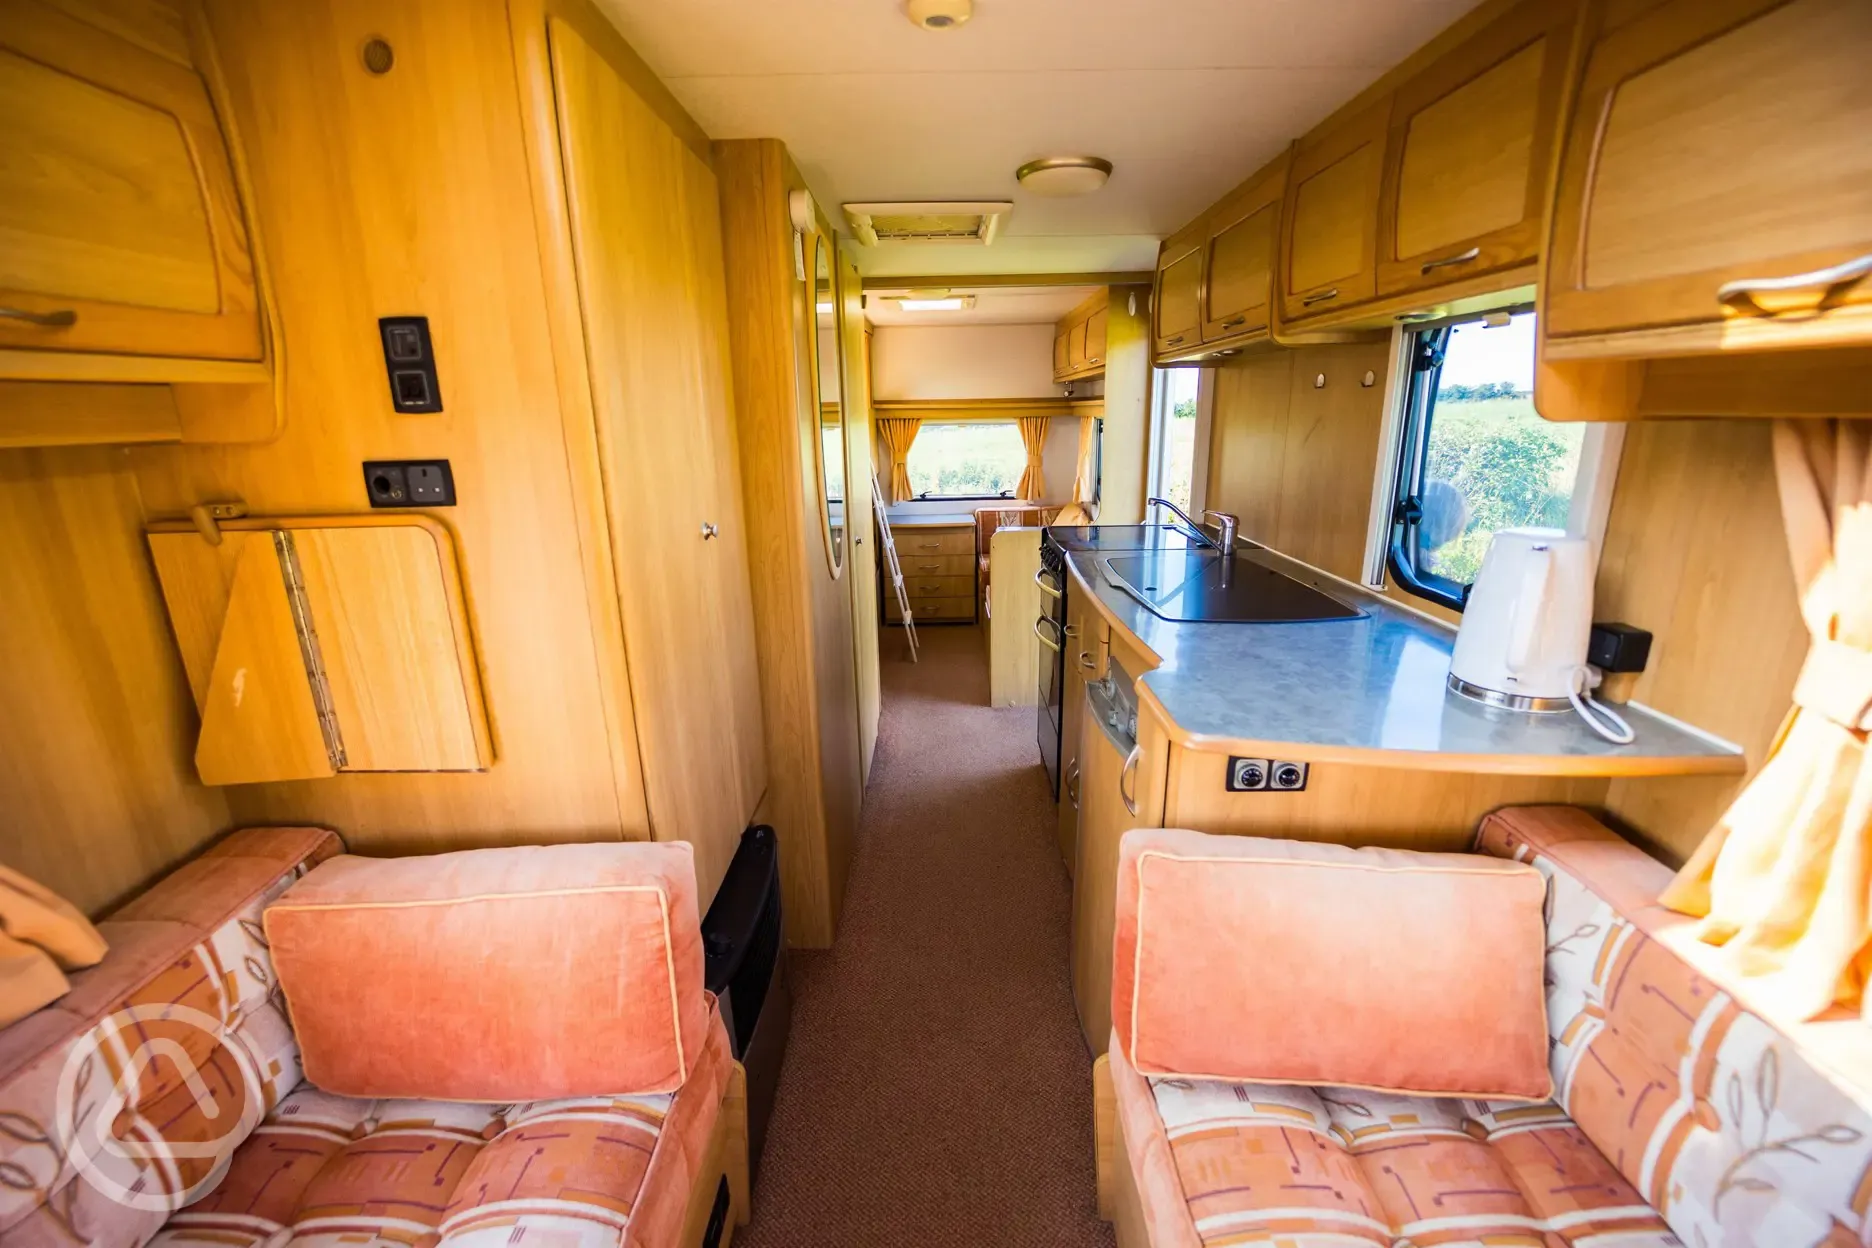 Pre-pitched touring caravan - Luna interior